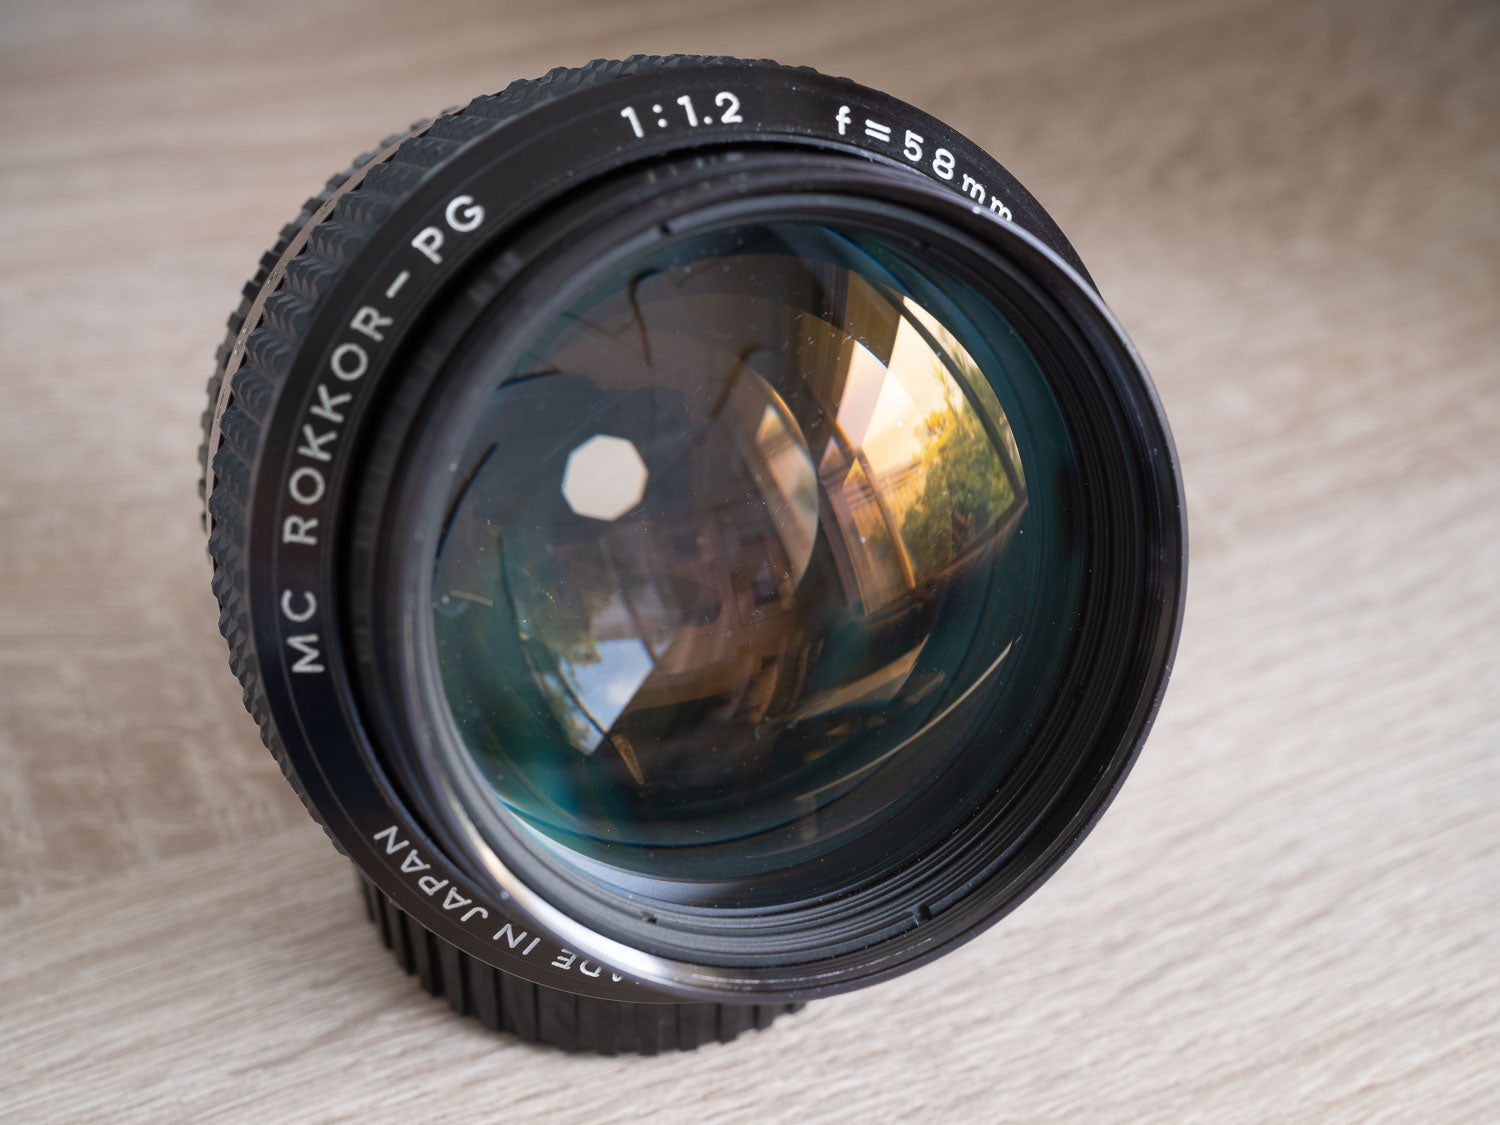 Vintage Lens: Minolta Rokkor PG 58mm 1.2 Review on Fujifilm GFX